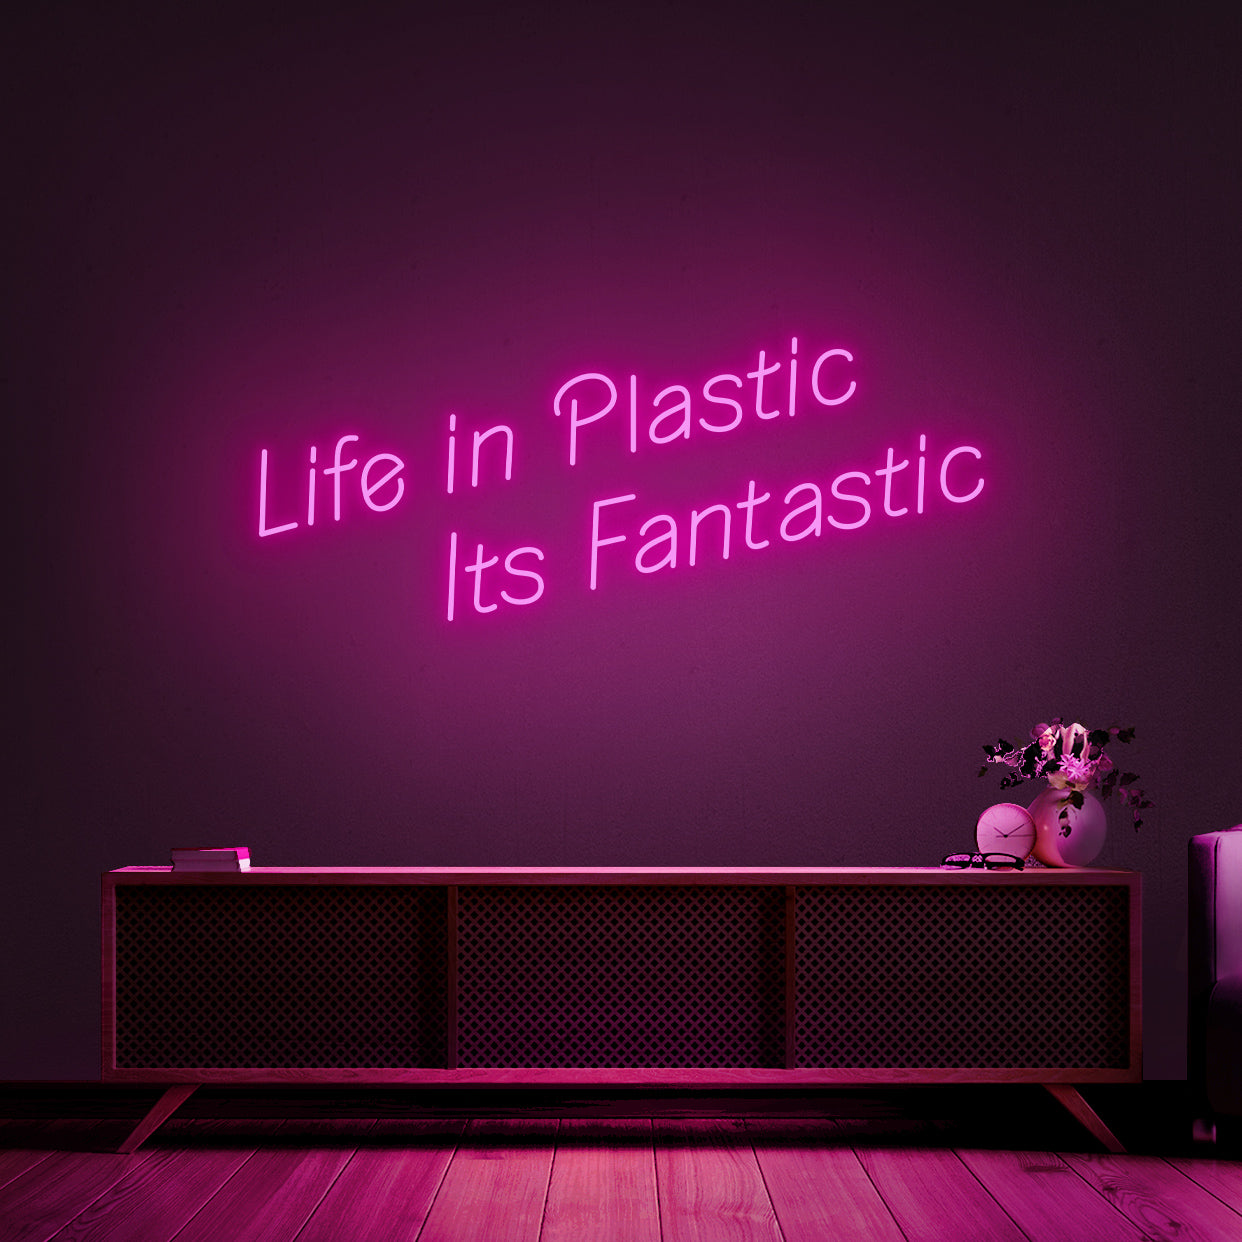 Life in plastic, its fantastic